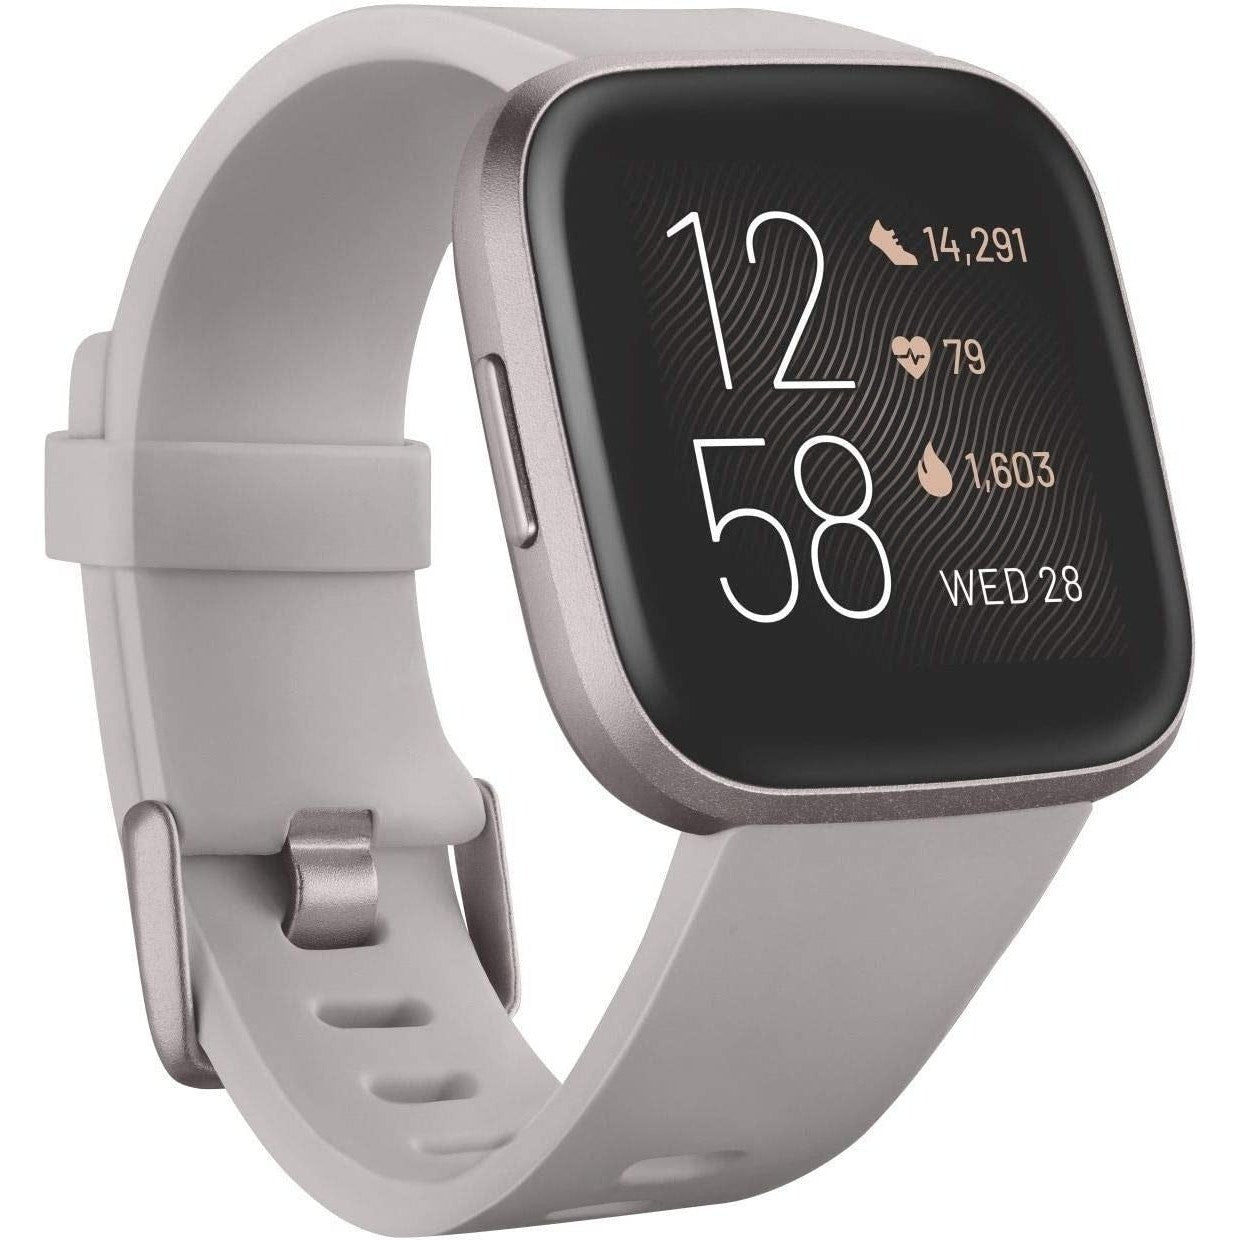 Fitbit Versa 2 Smart Fitness Watch - Mist Grey - Refurbished Pristine